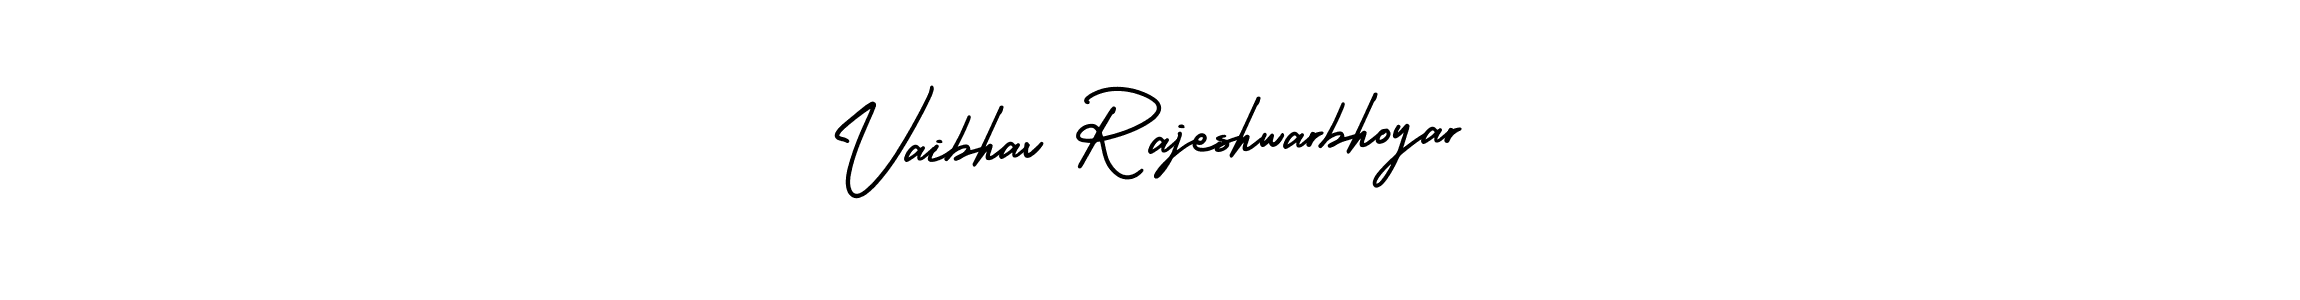 Best and Professional Signature Style for Vaibhav Rajeshwarbhoyar. AmerikaSignatureDemo-Regular Best Signature Style Collection. Vaibhav Rajeshwarbhoyar signature style 3 images and pictures png